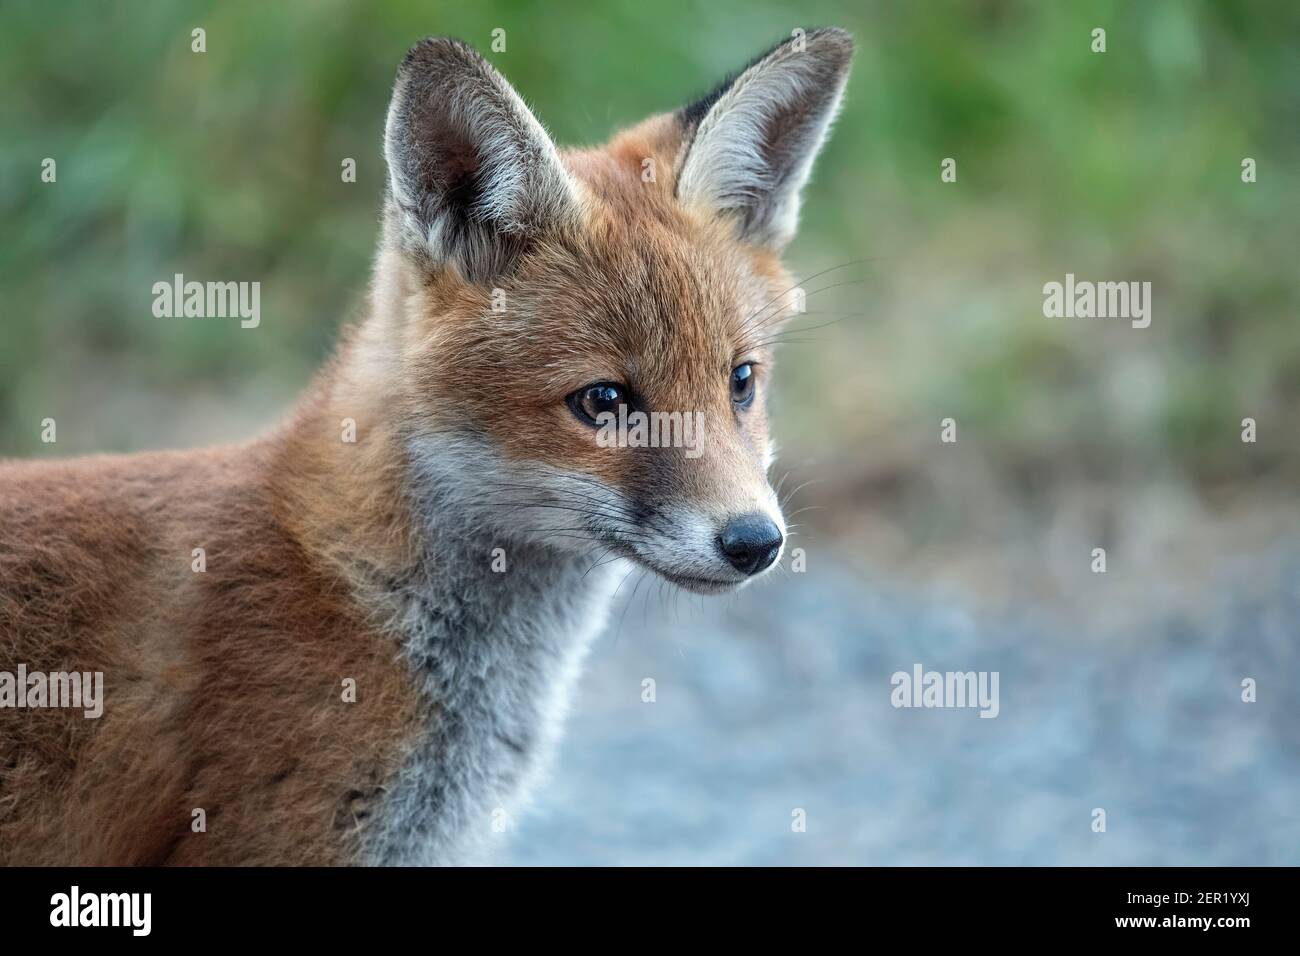 Fox cub, portrait, close up, in Scotland, u.k in the springtime Stock Photo